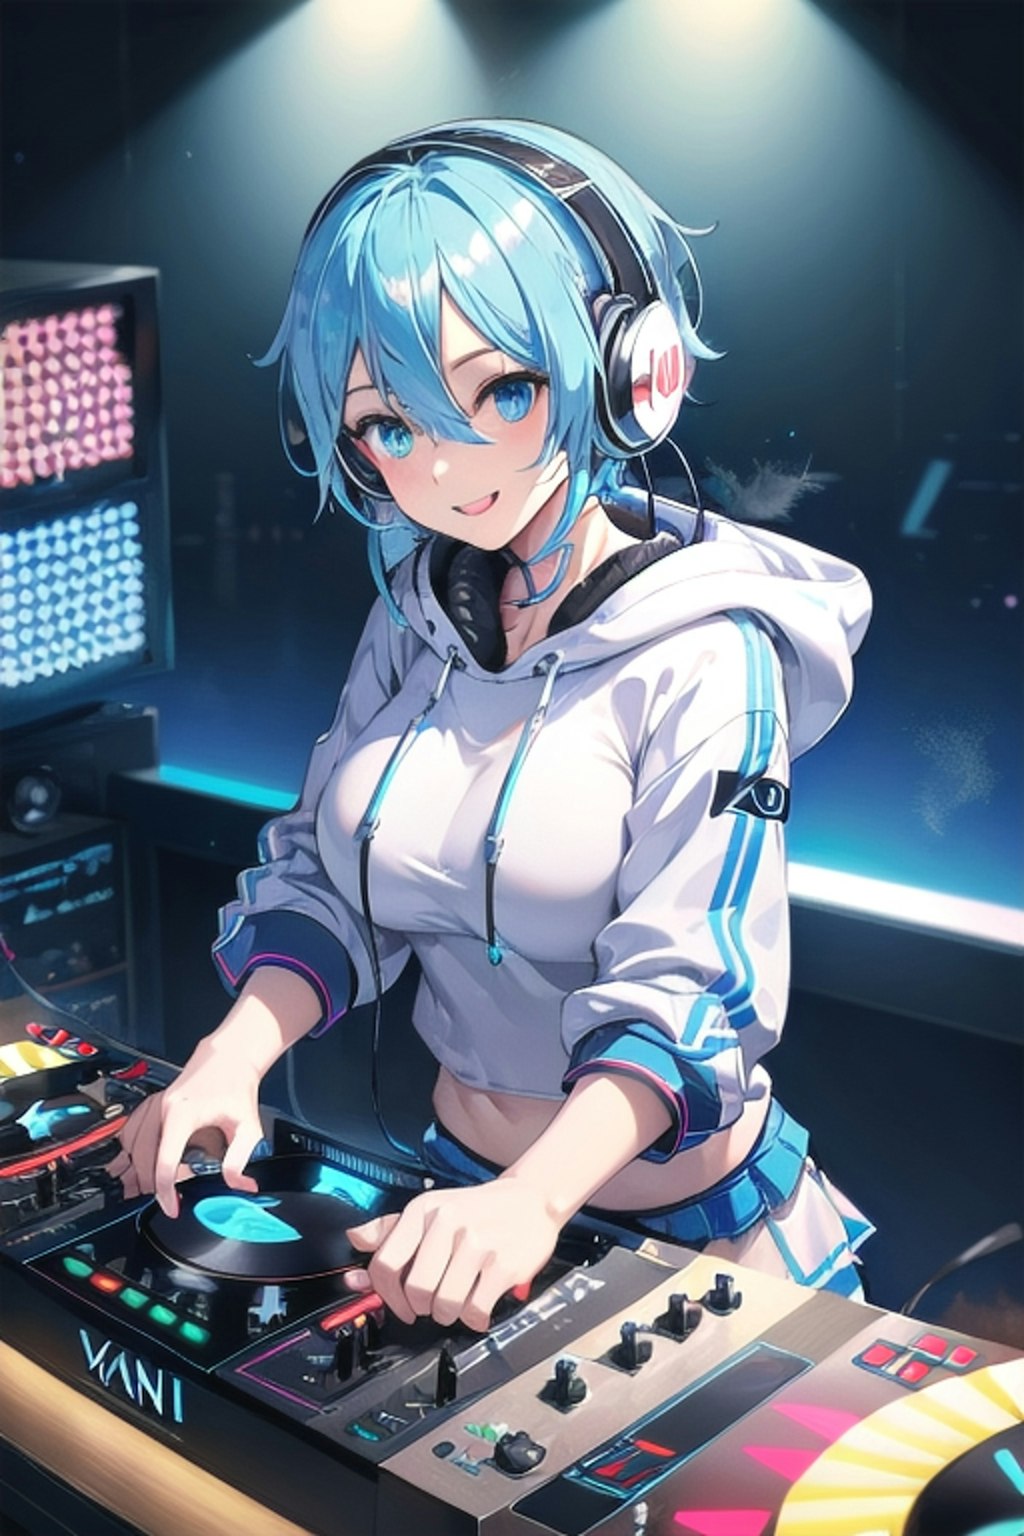 DJお姉さん